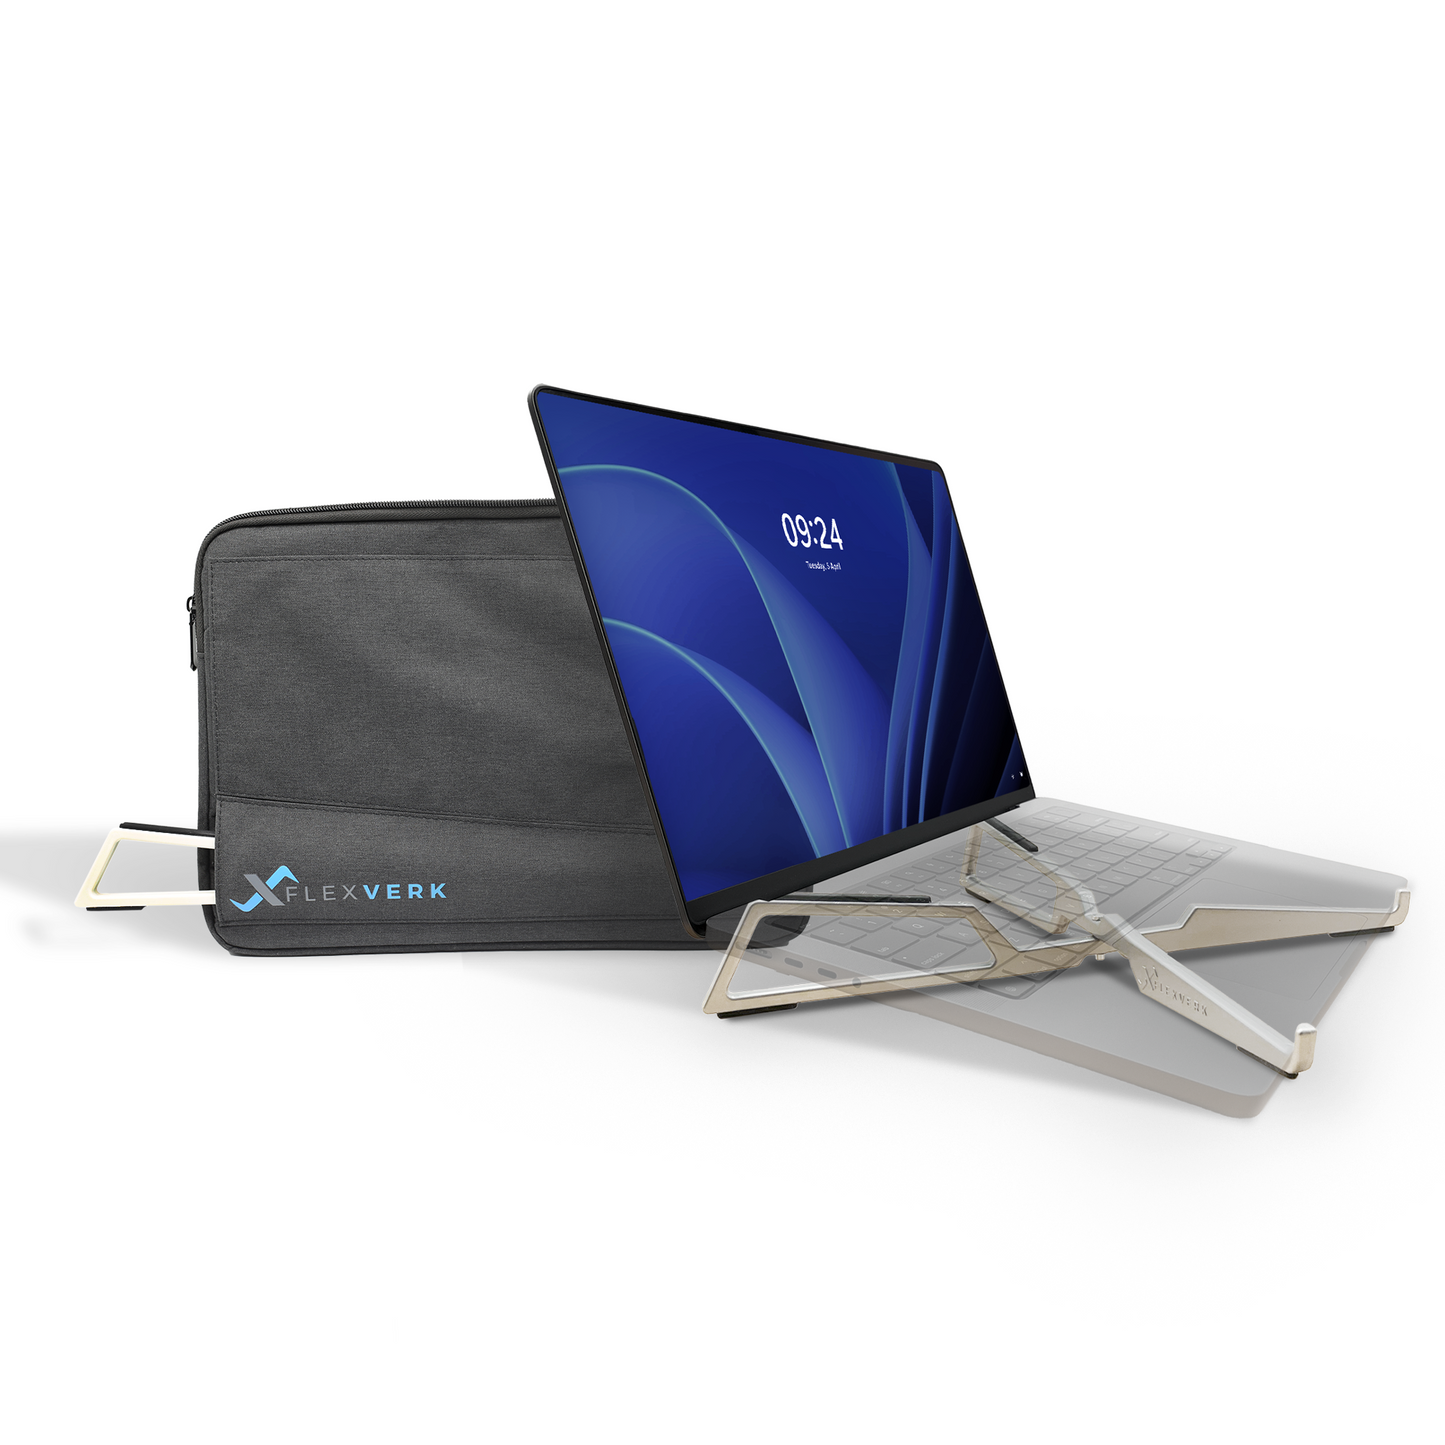 Laptop Stand & Sleeve Bundle